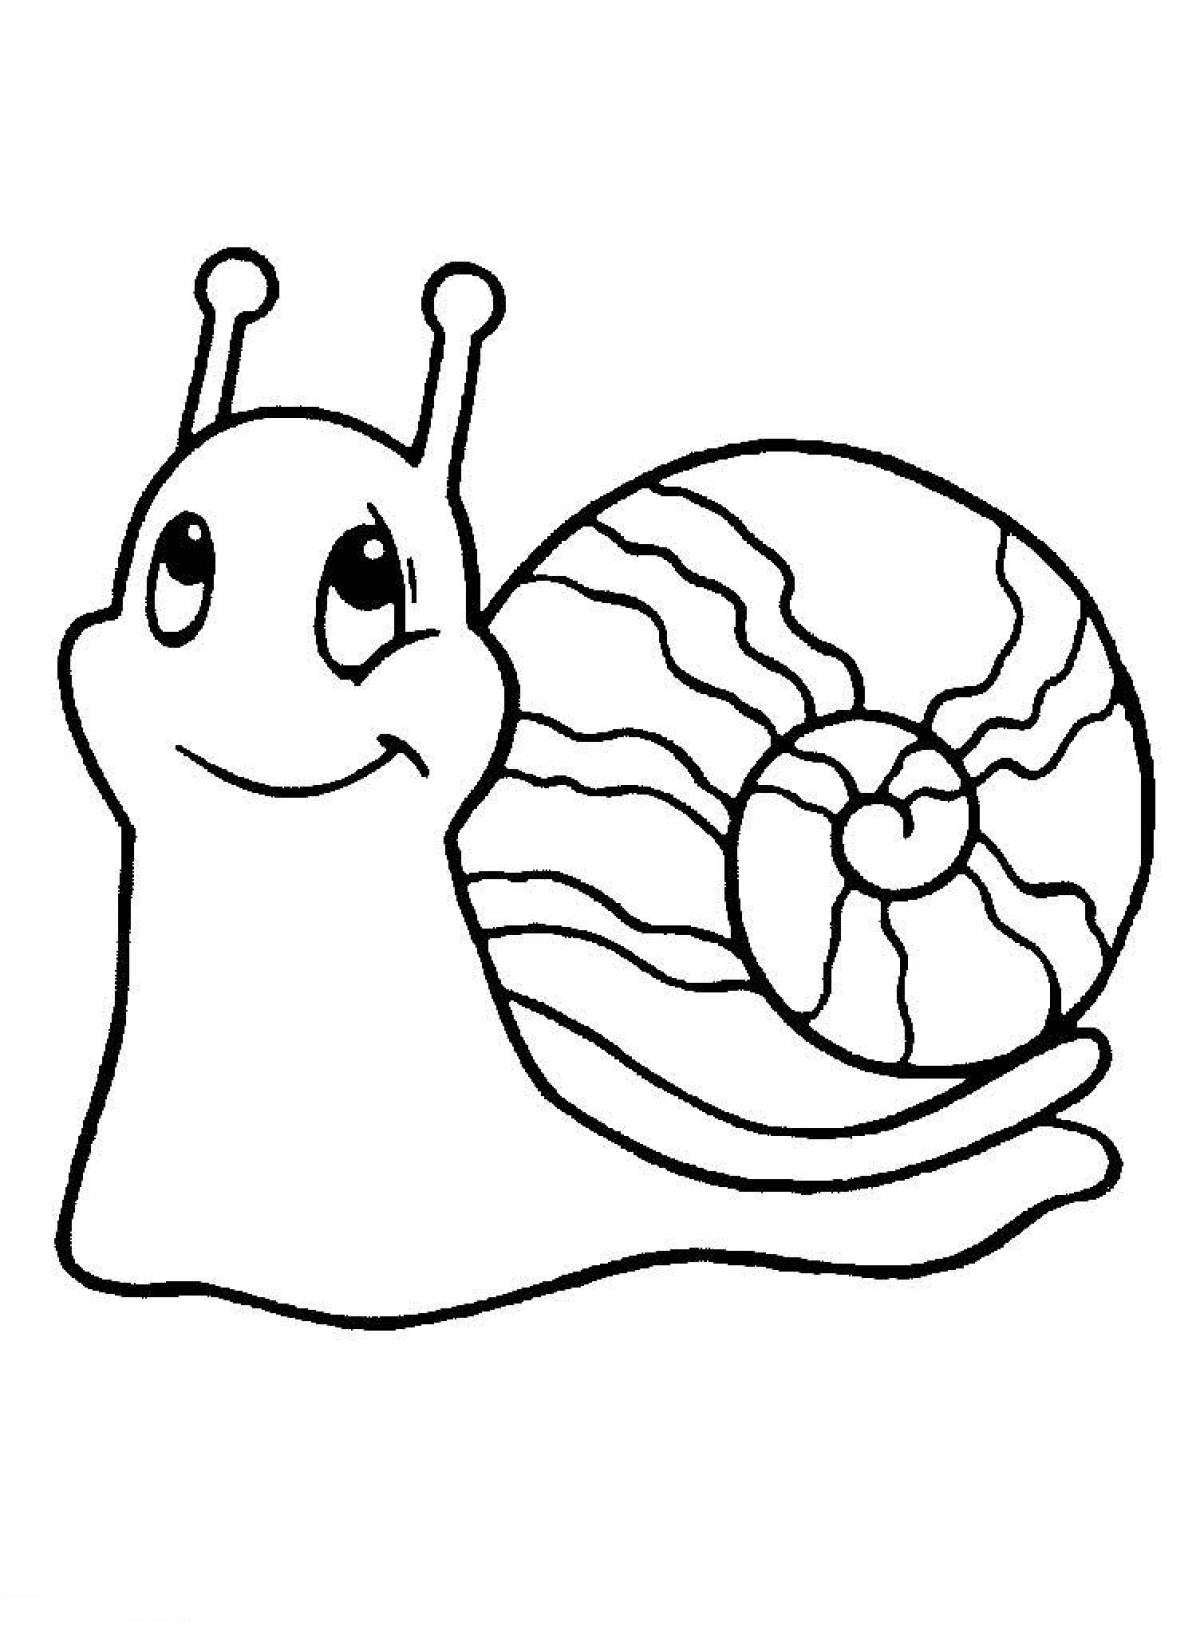 Humble snail